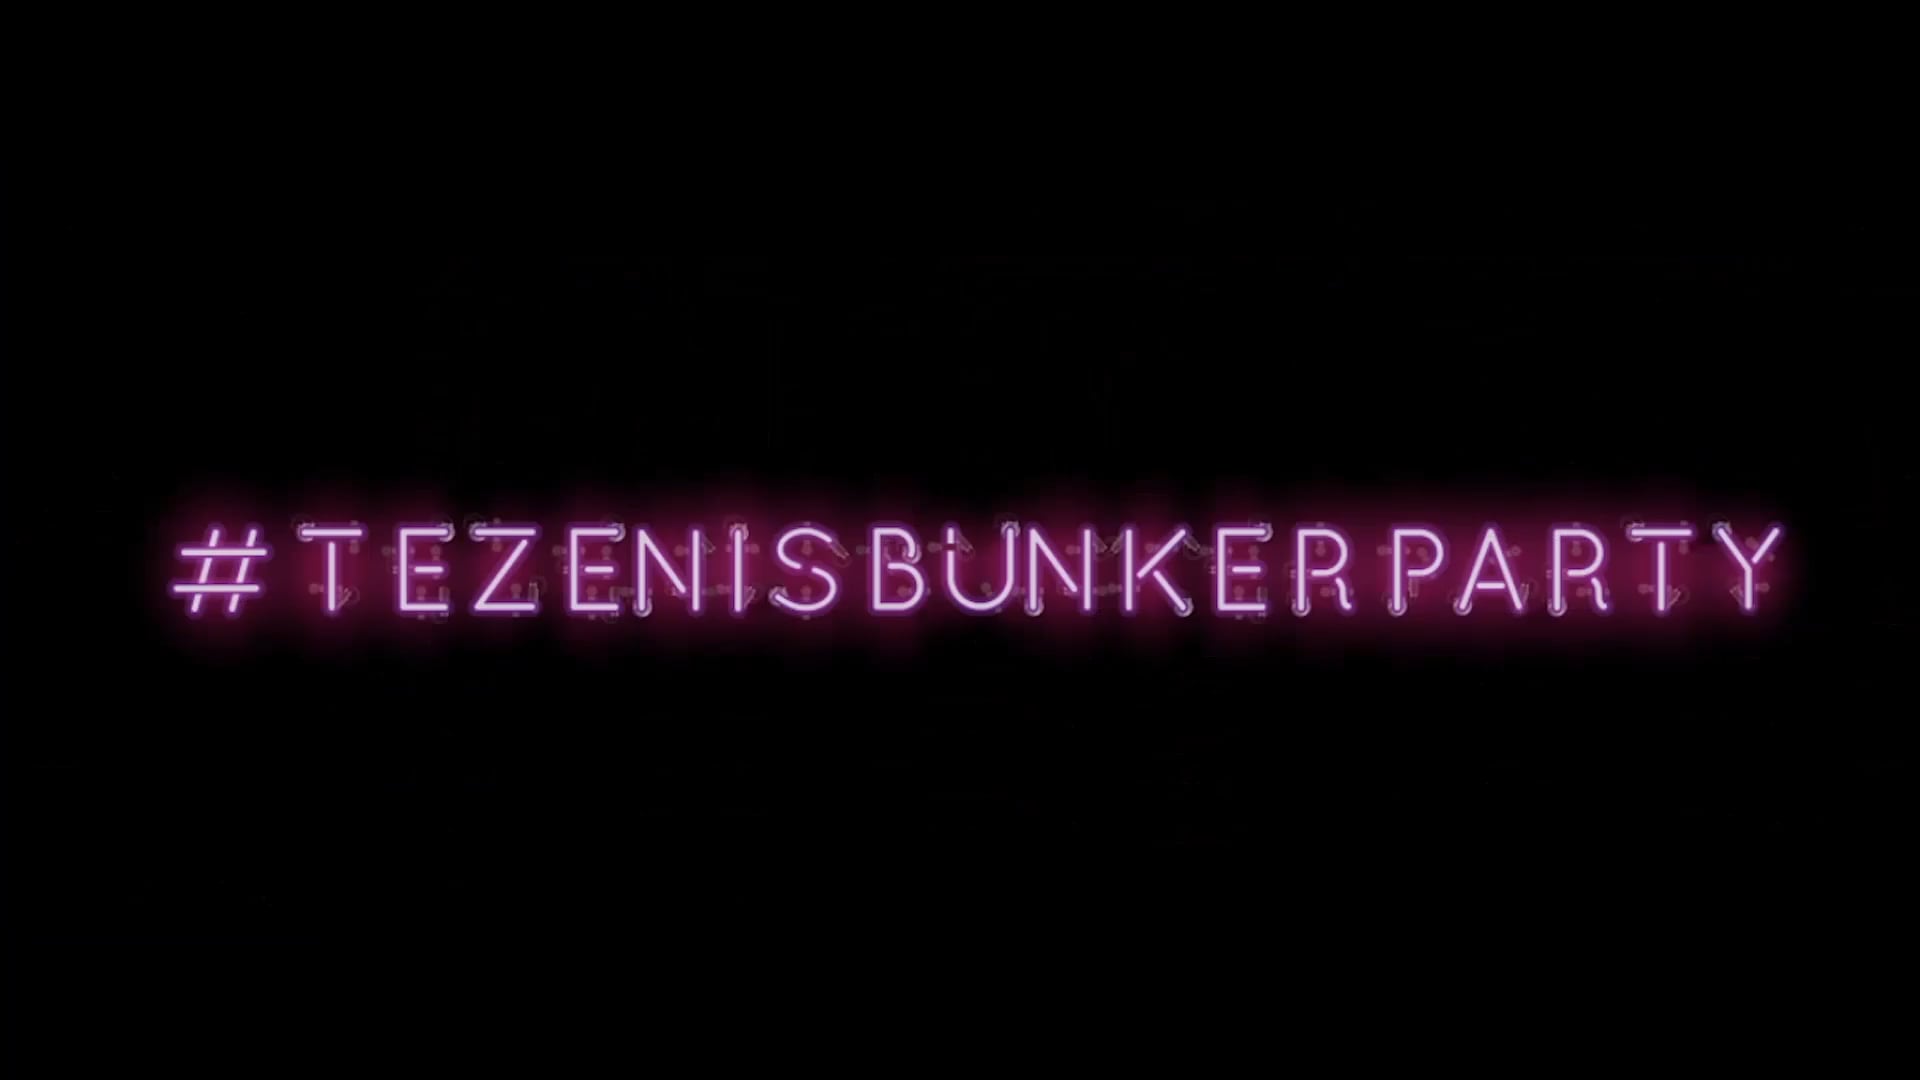 TEZENIS BUNKER PARTY